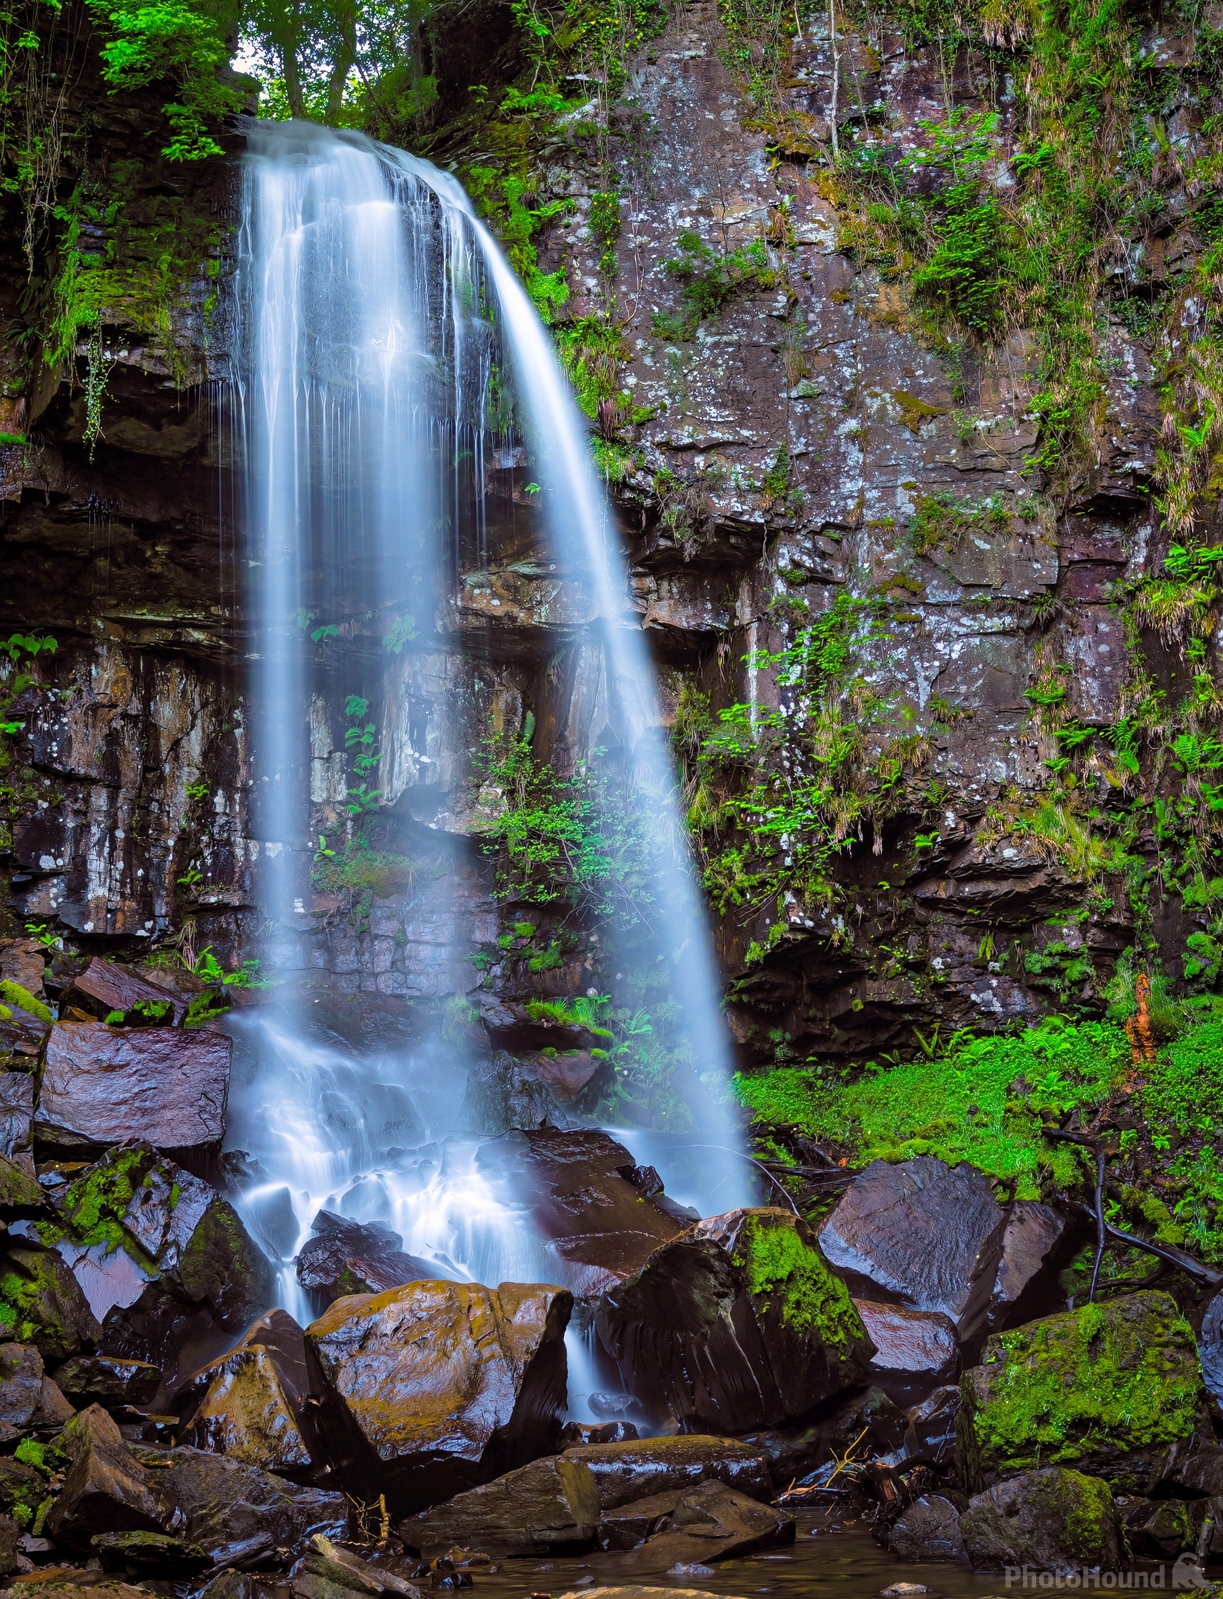 Image of Melincourt Falls by John Crowland